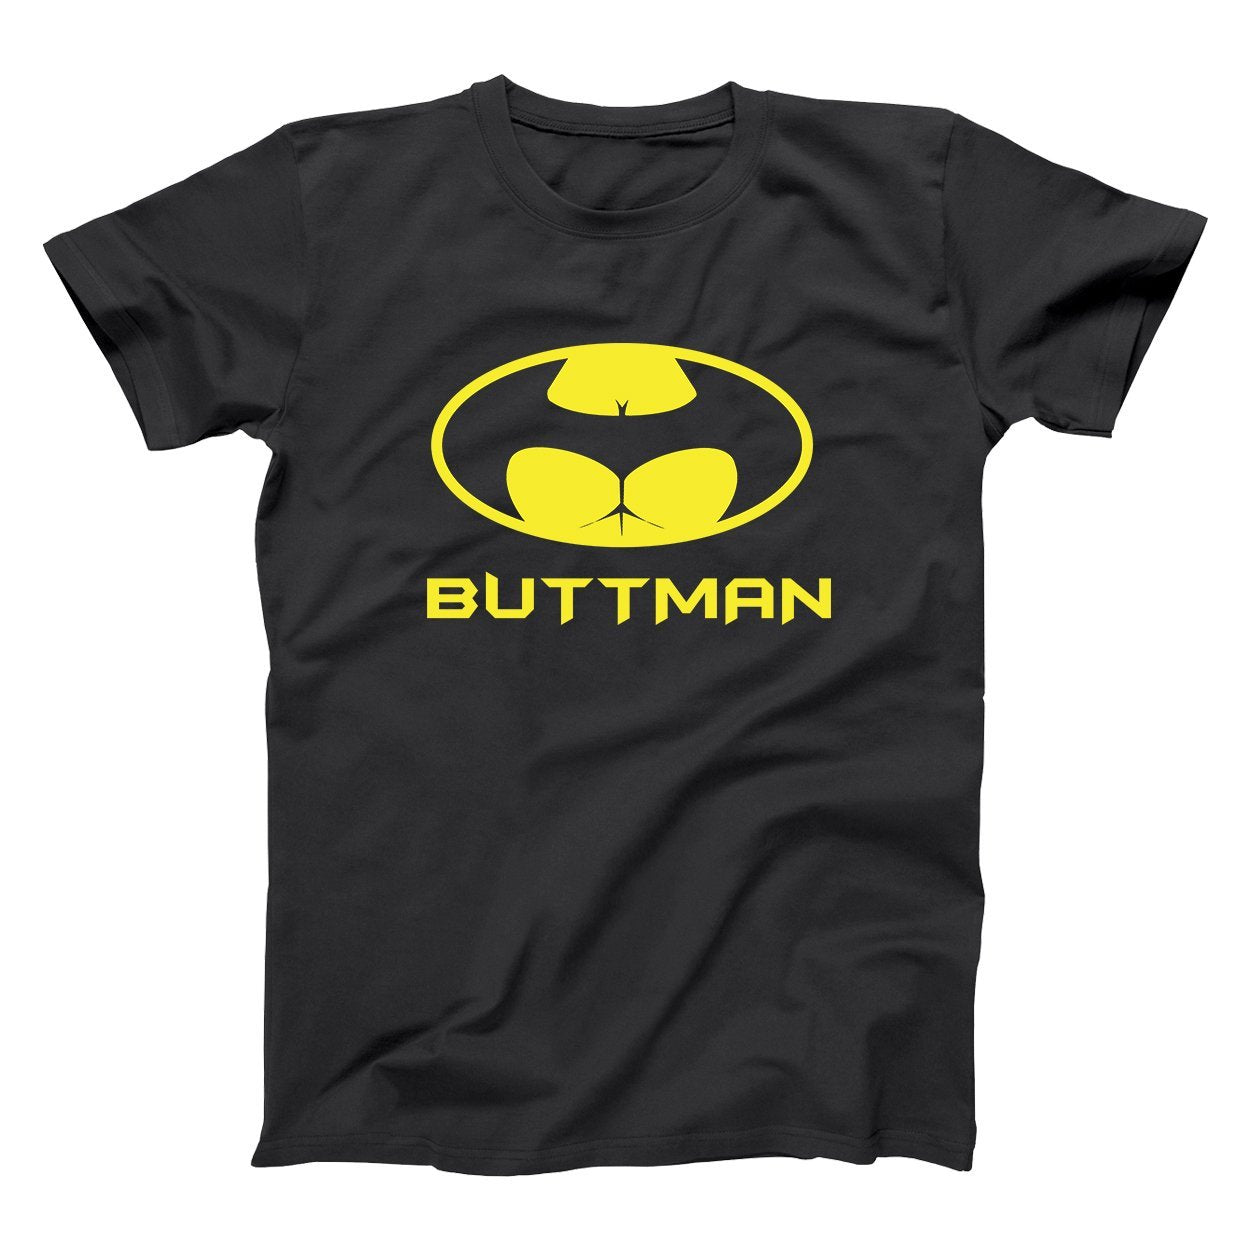 Buttman Tshirt - Donkey Tees